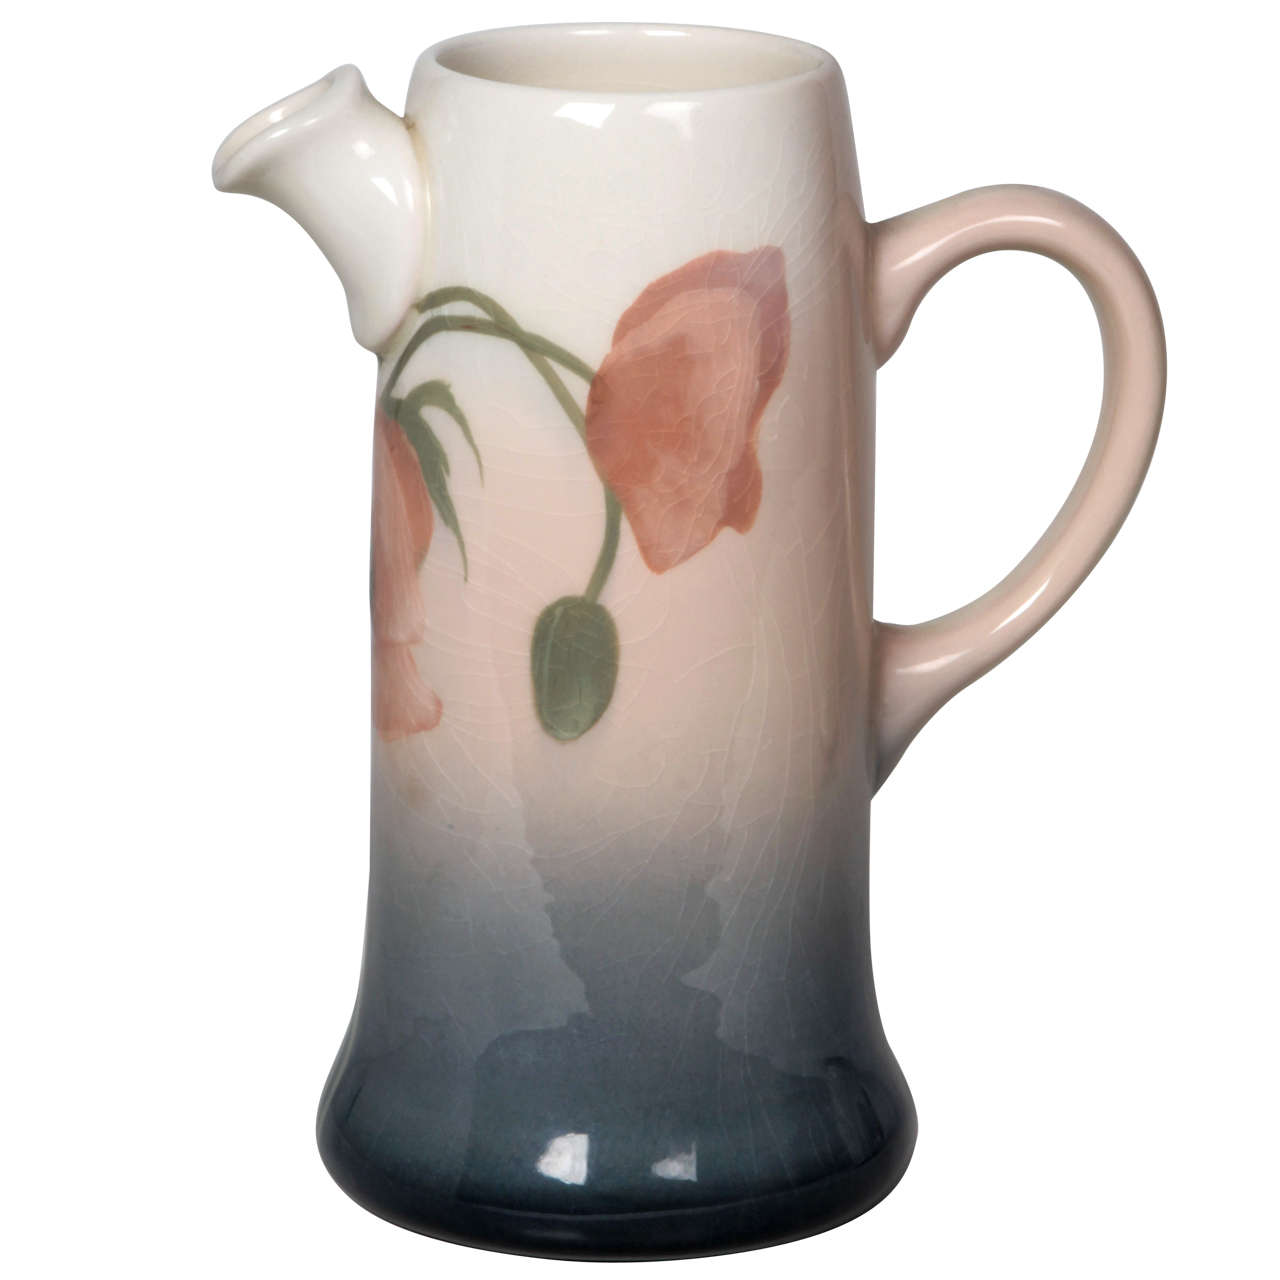 Sara Sax / Rookwood Pottery Art Nouveau "Poppy" pitcher 1906 For Sale